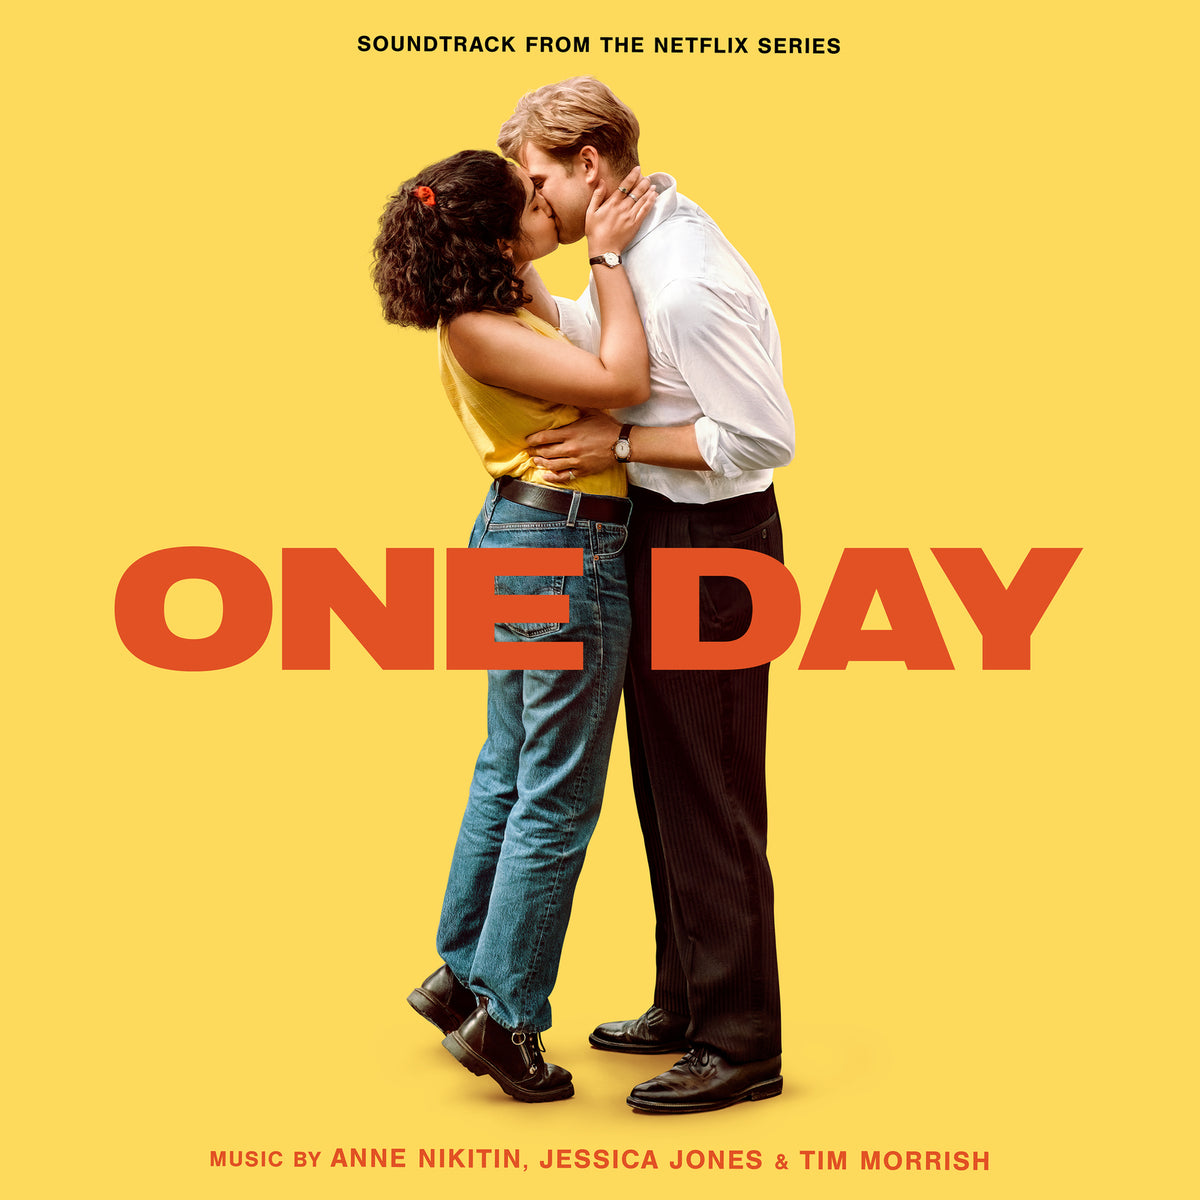 Anne Nikitin, Jessica Jones & Tim Morrish - One Day - Soundtrack From The Netflix Series - SILCD1758